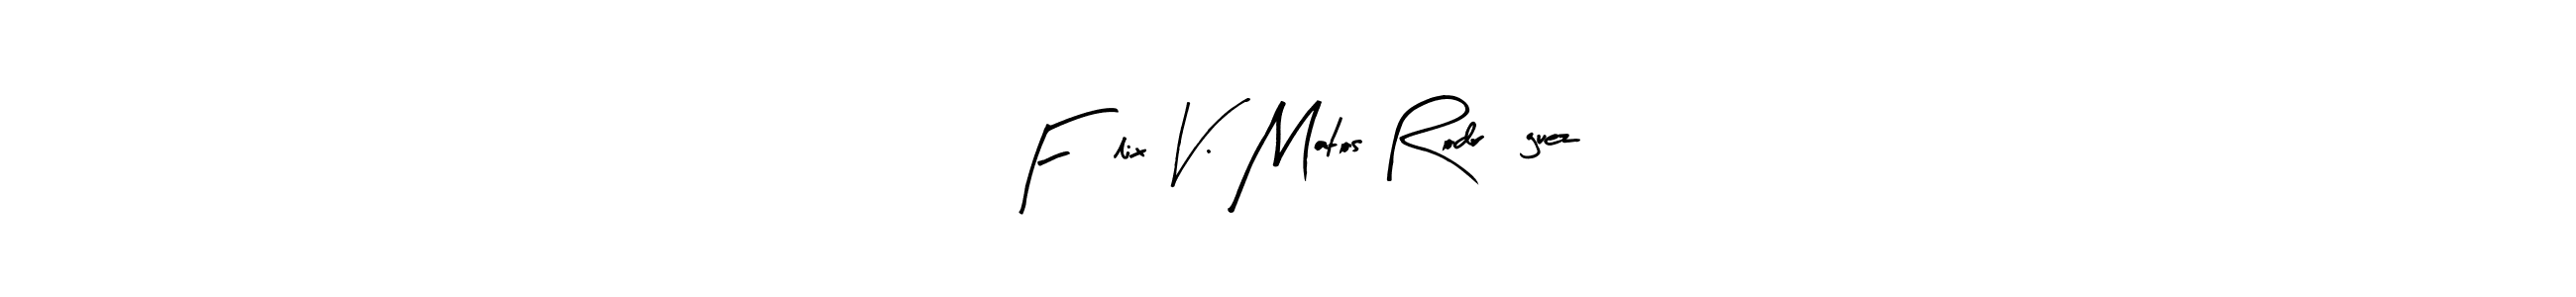 Félix V. Matos Rodríguez stylish signature style. Best Handwritten Sign (Arty Signature) for my name. Handwritten Signature Collection Ideas for my name Félix V. Matos Rodríguez. Félix V. Matos Rodríguez signature style 8 images and pictures png